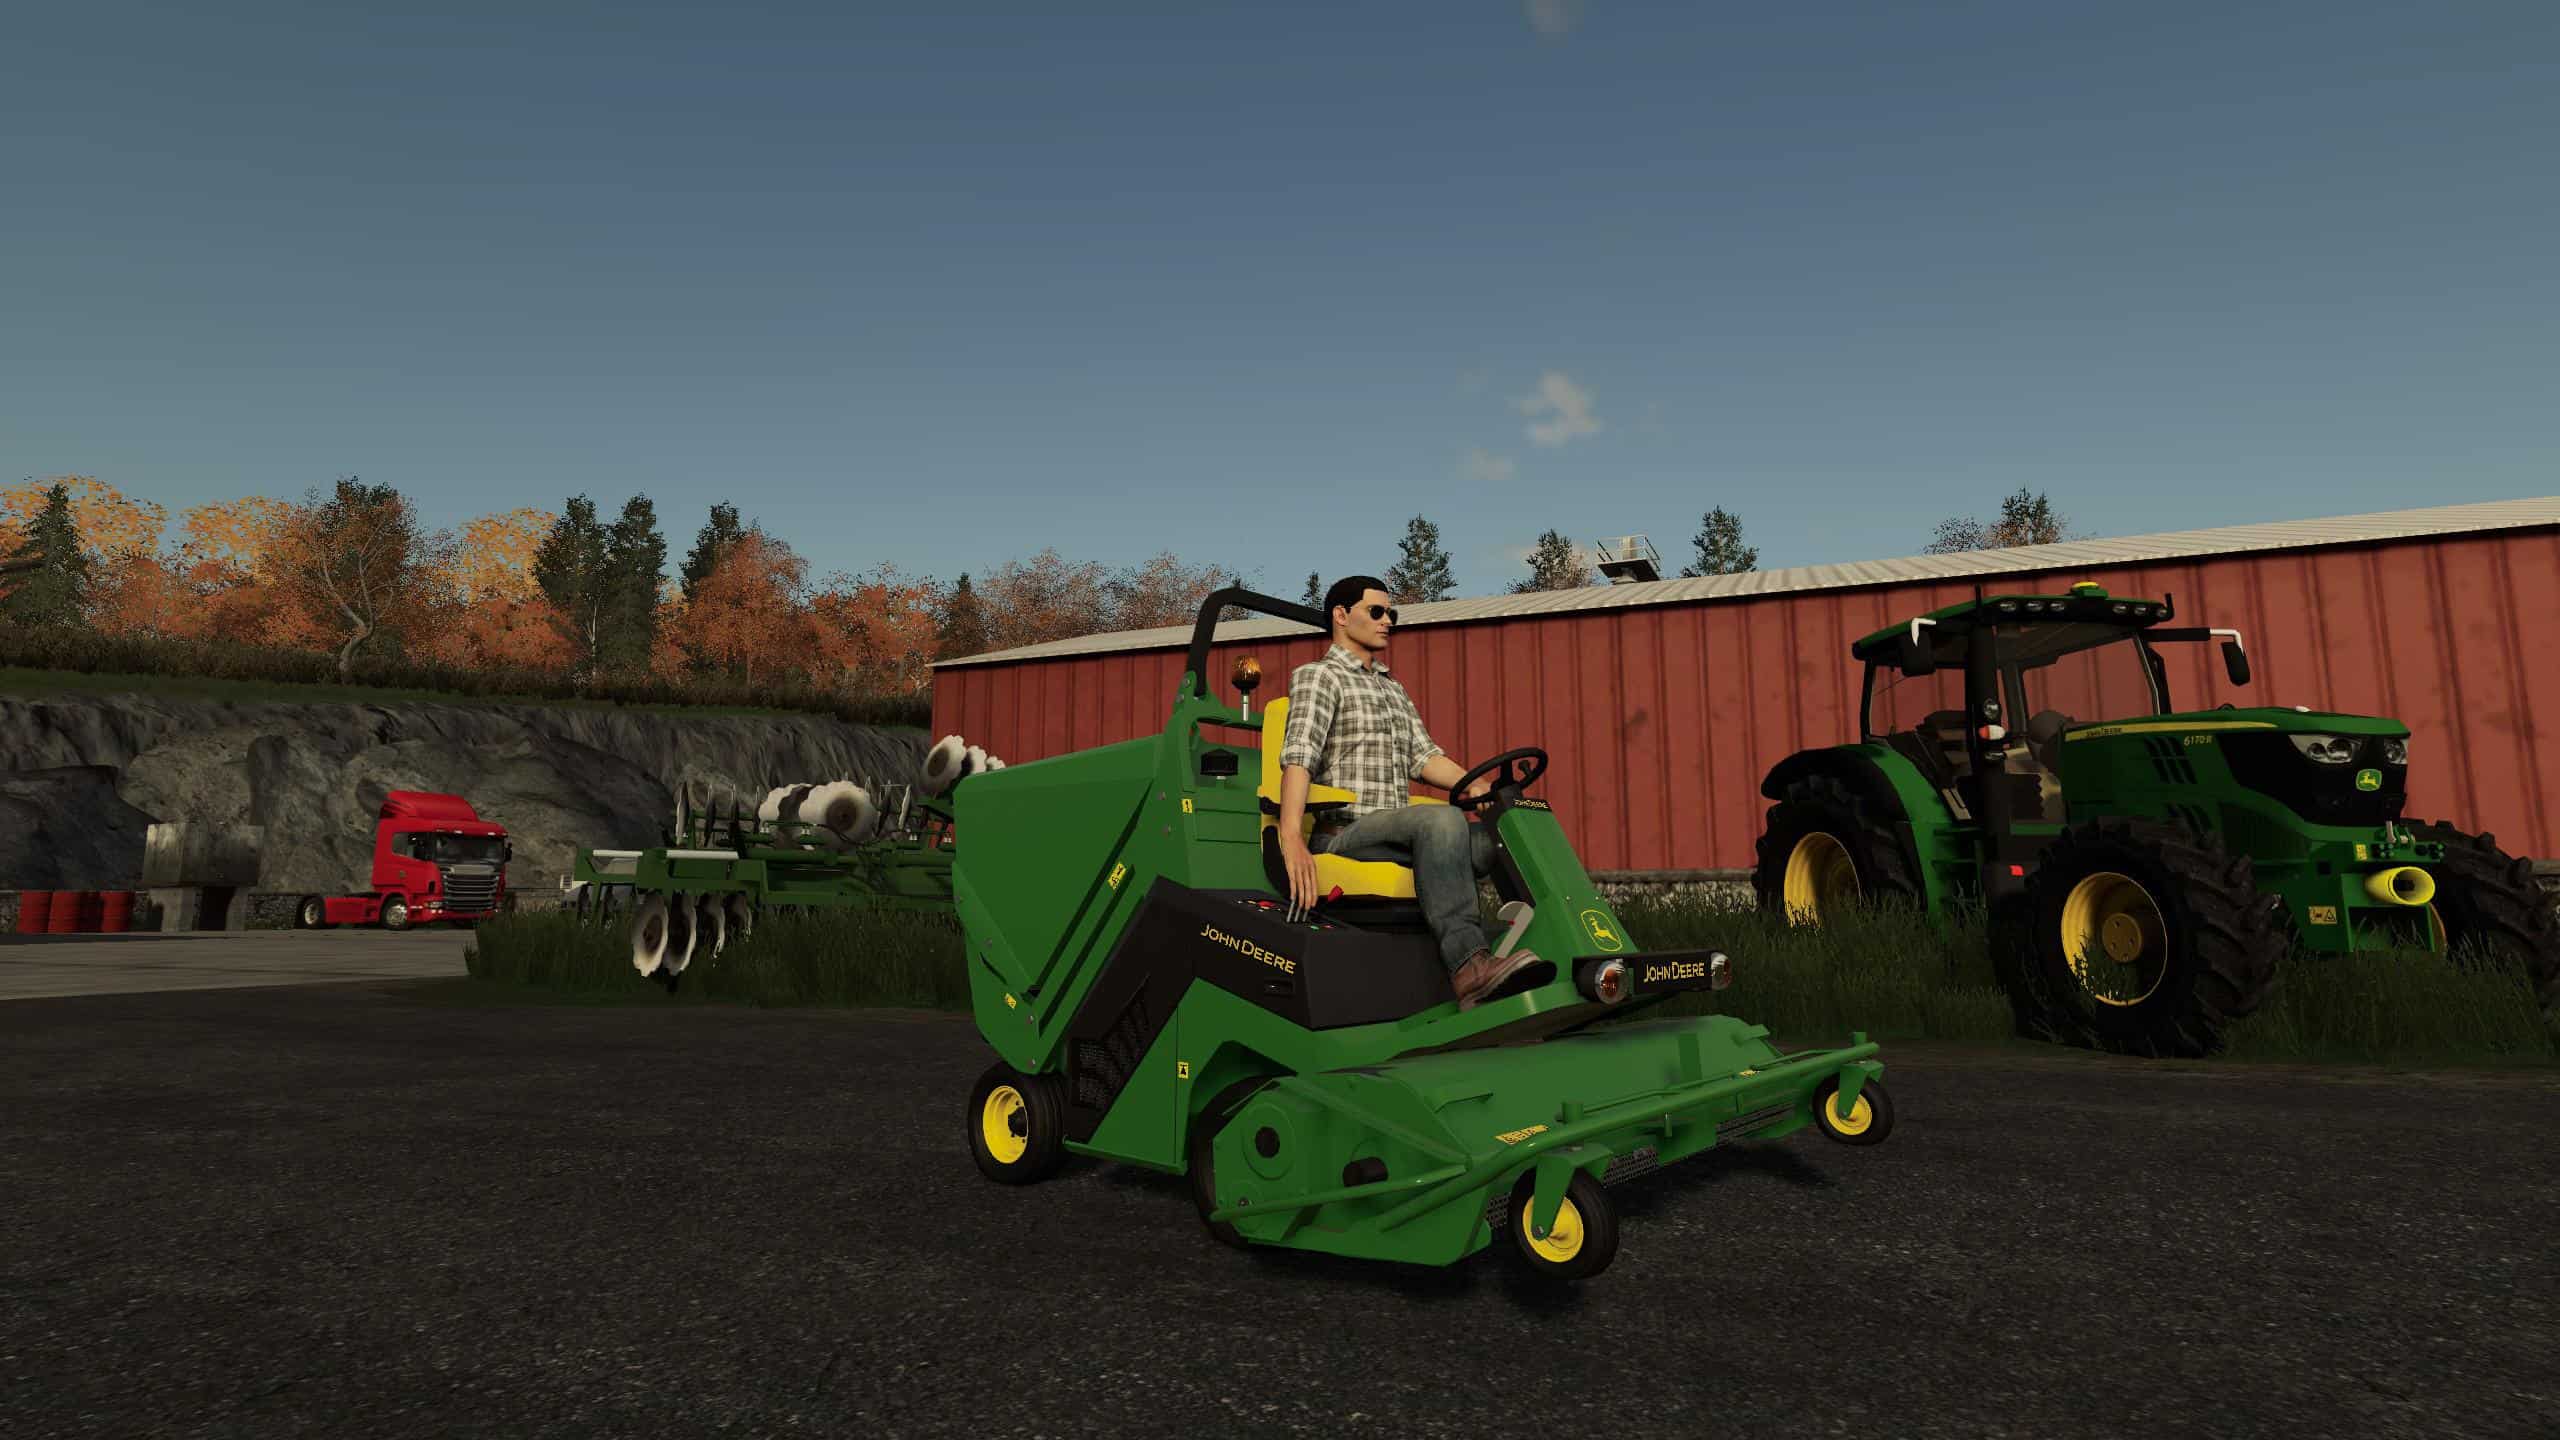 John Deere Mower V10 Mod Farming Simulator 19 Mod Fs19